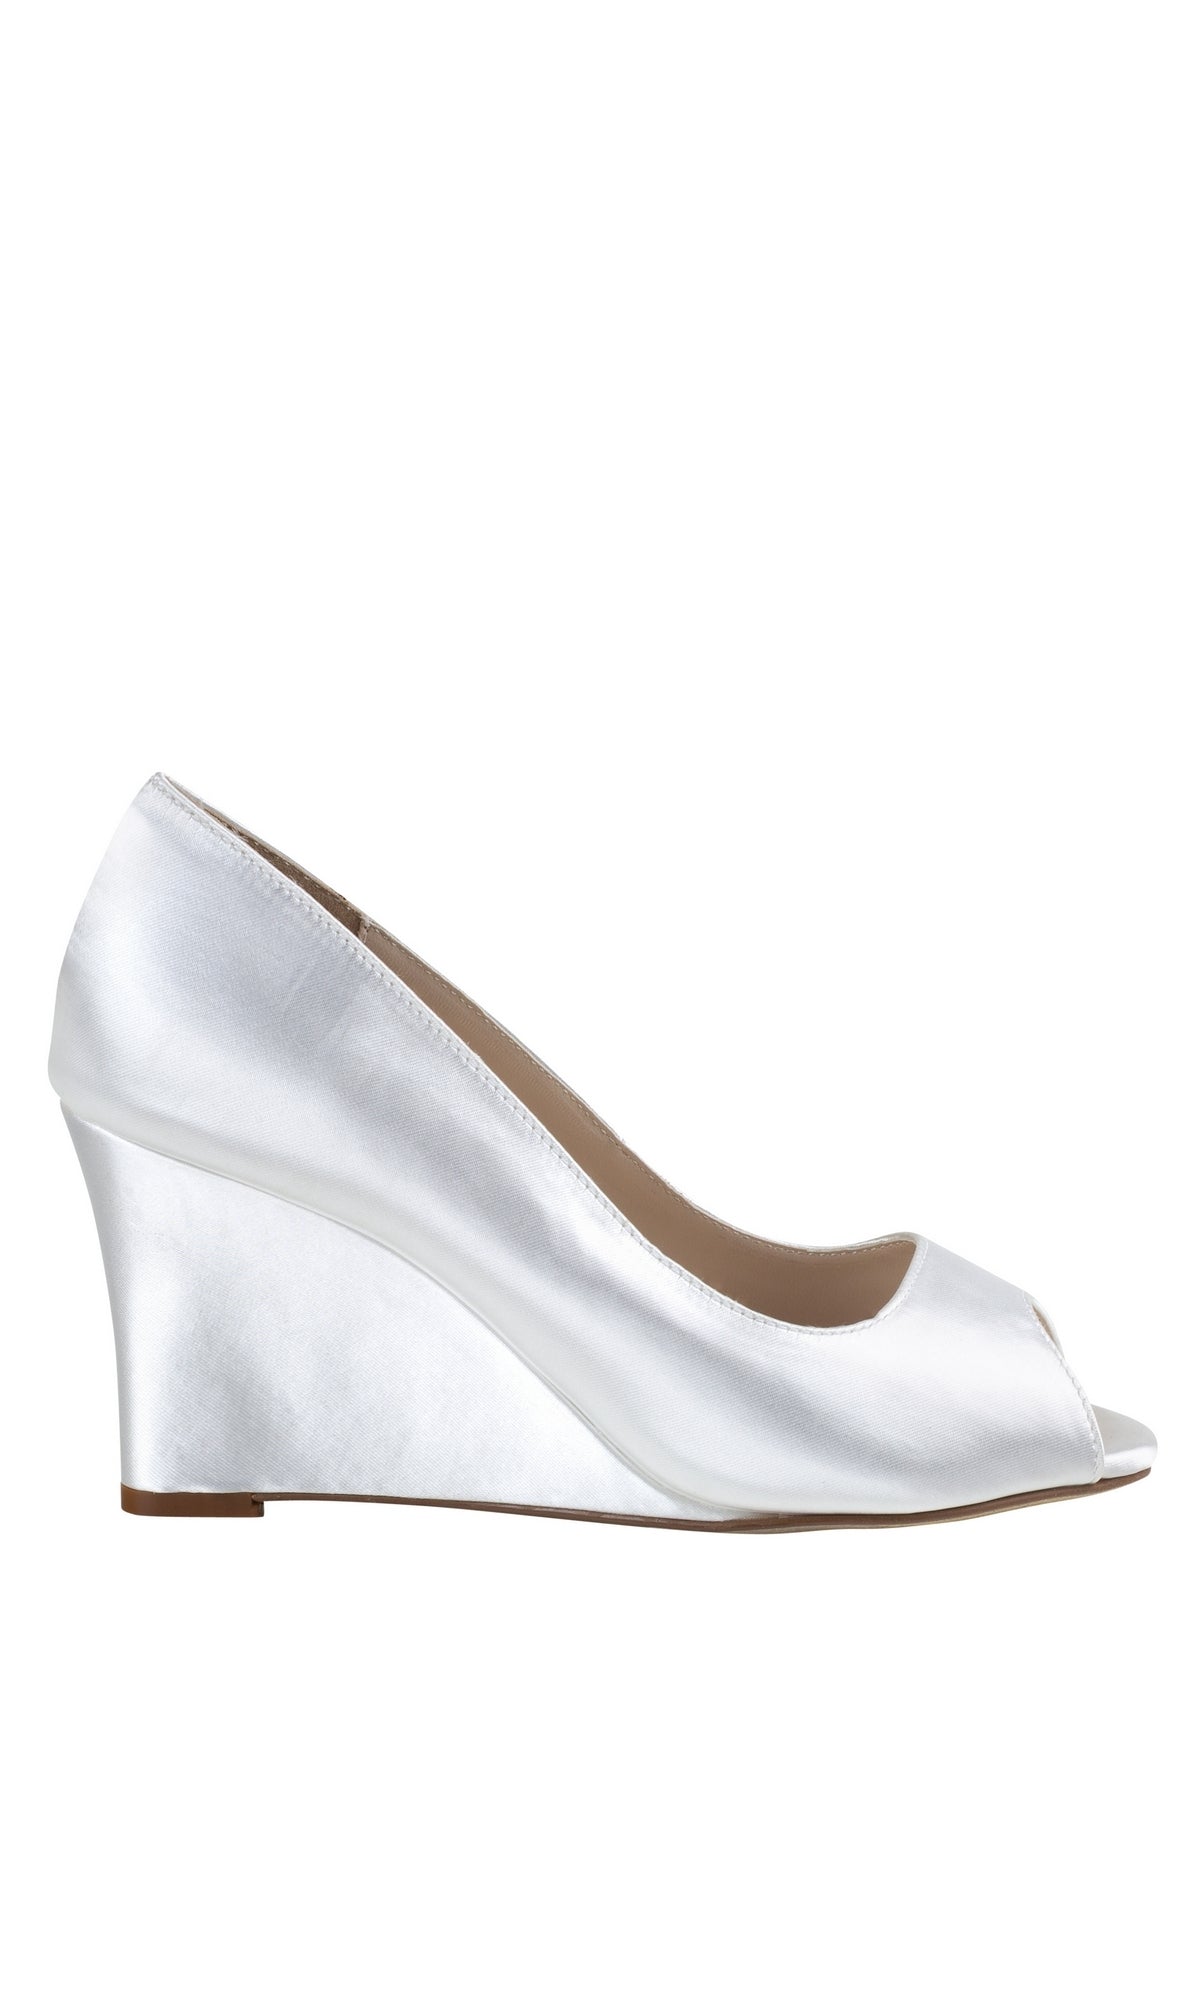 Nicole White Peep Toe 3in Prom Shoes 4588